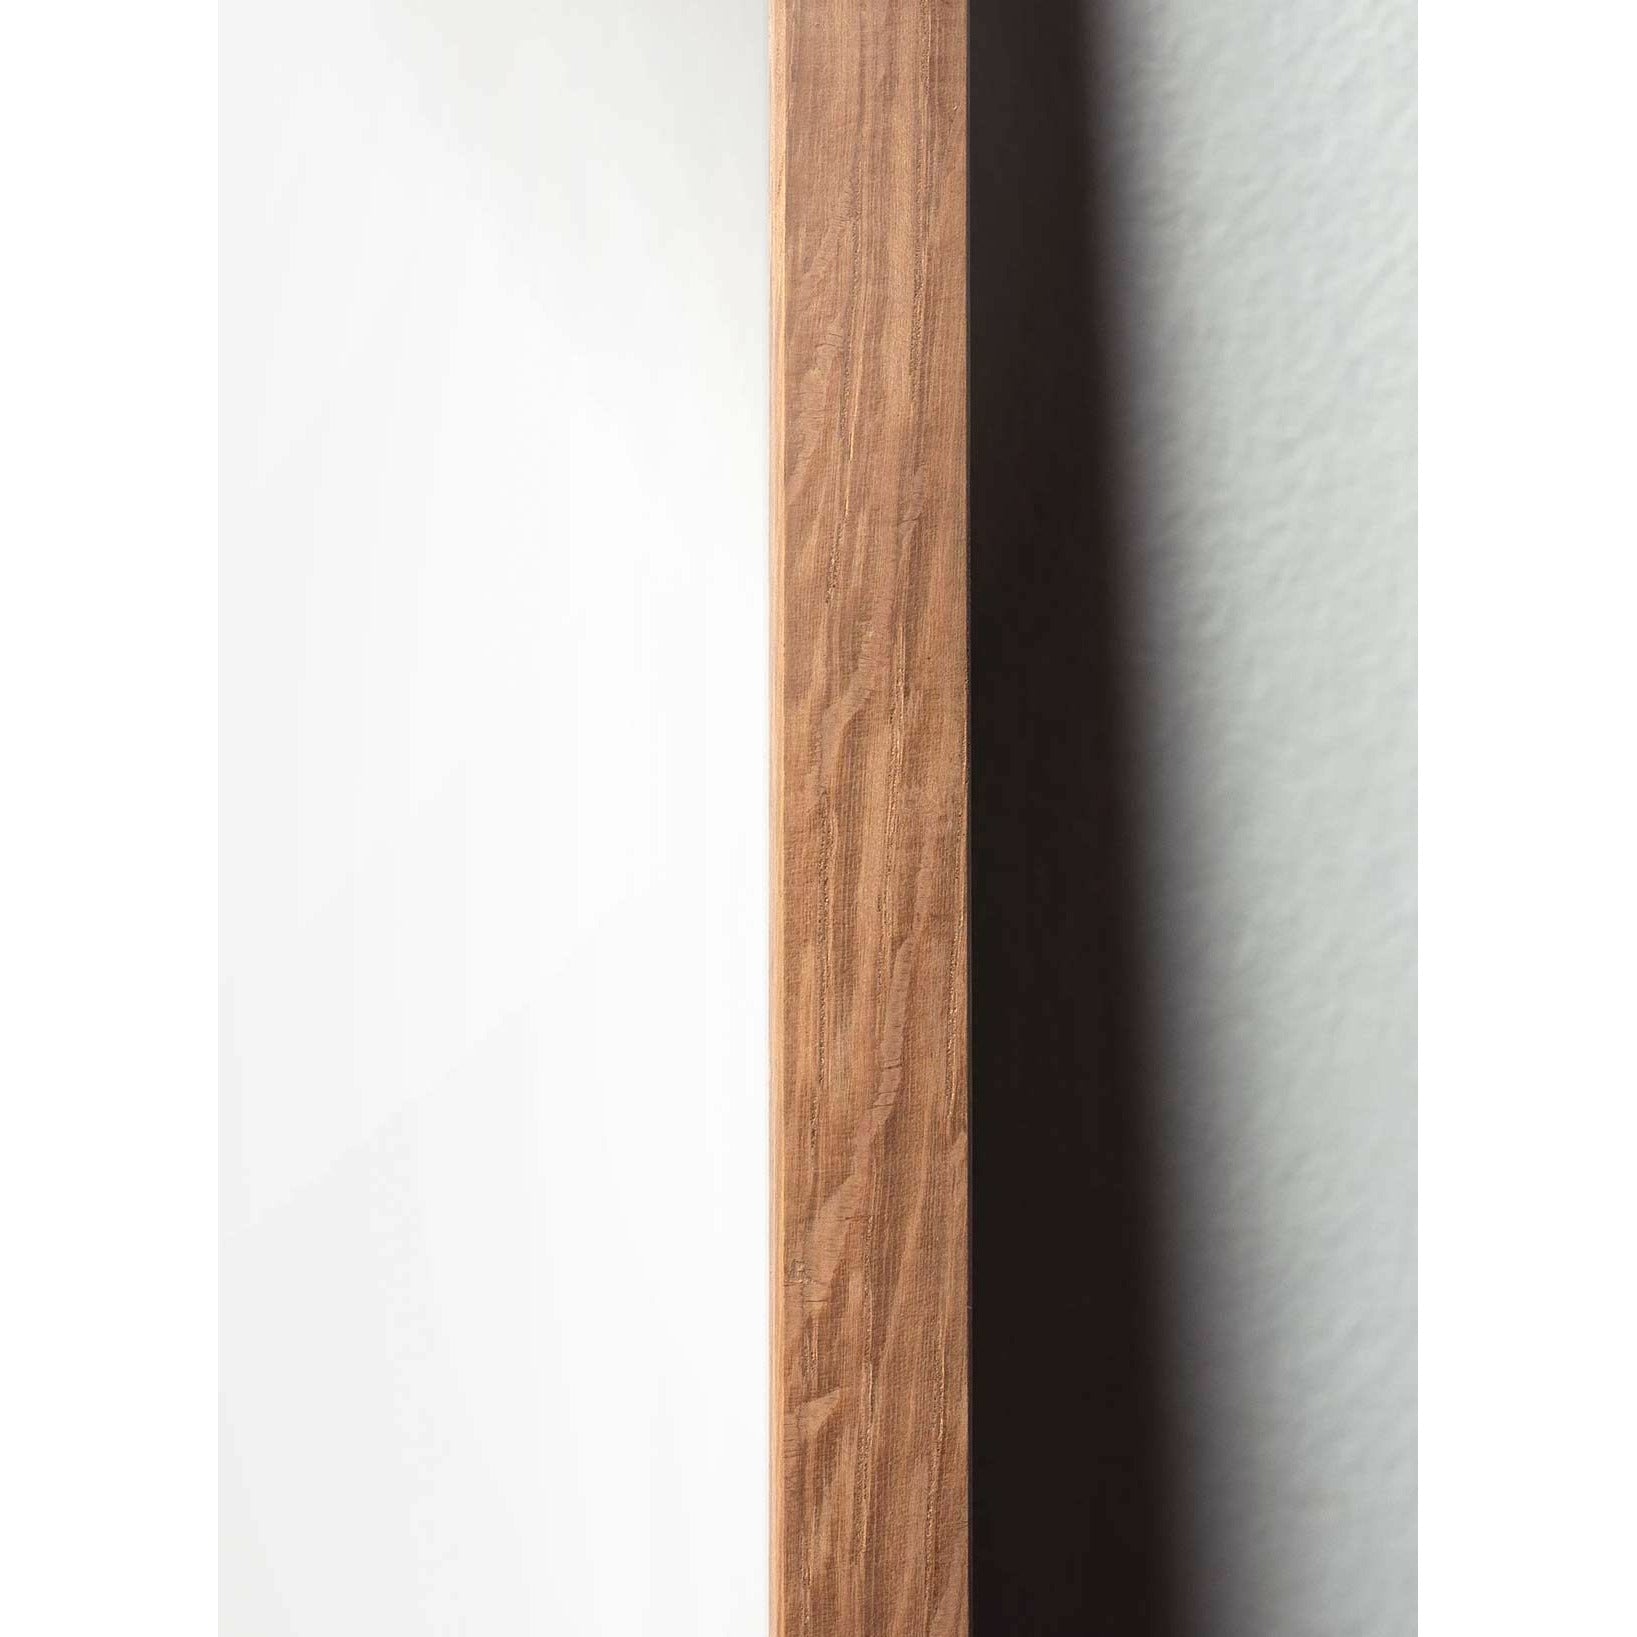 Póster de figuras de huevo de creación, marco hecho de madera clara de 30x40 cm, marrón